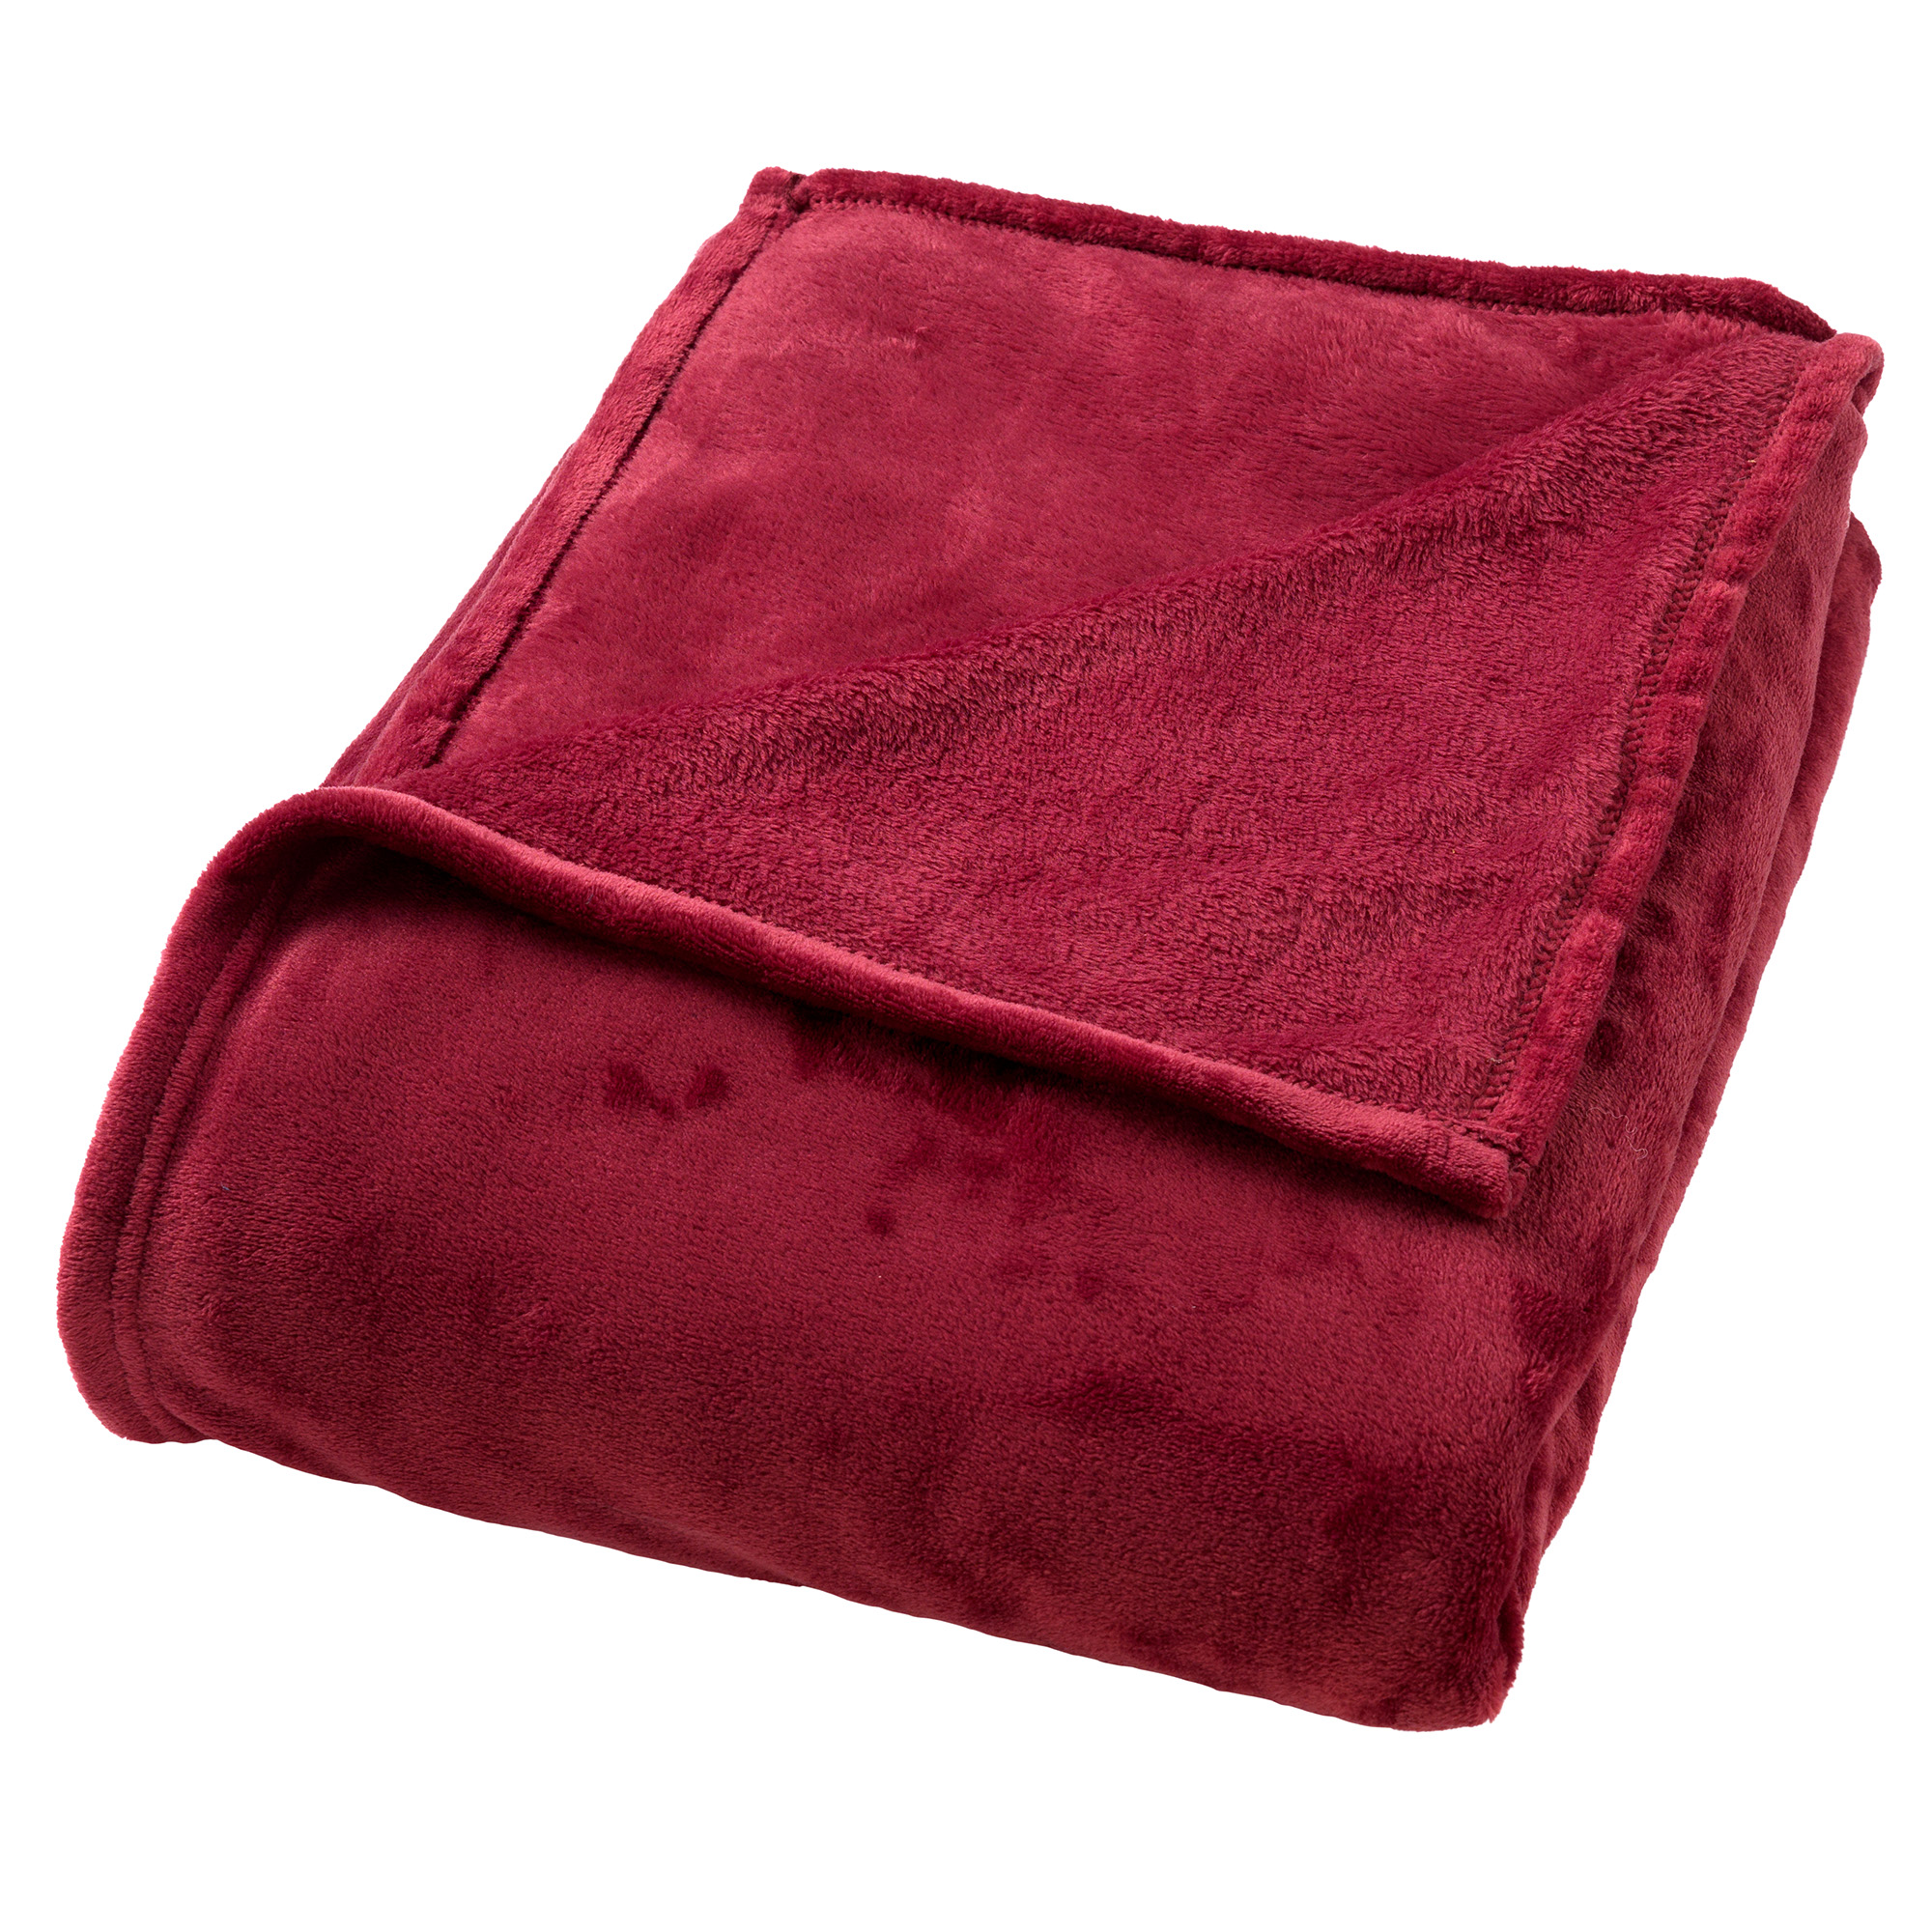 CHARLIE - Plaid 200x220 cm - extra grote fleece deken - effen kleur - Red Plum - donkerroze